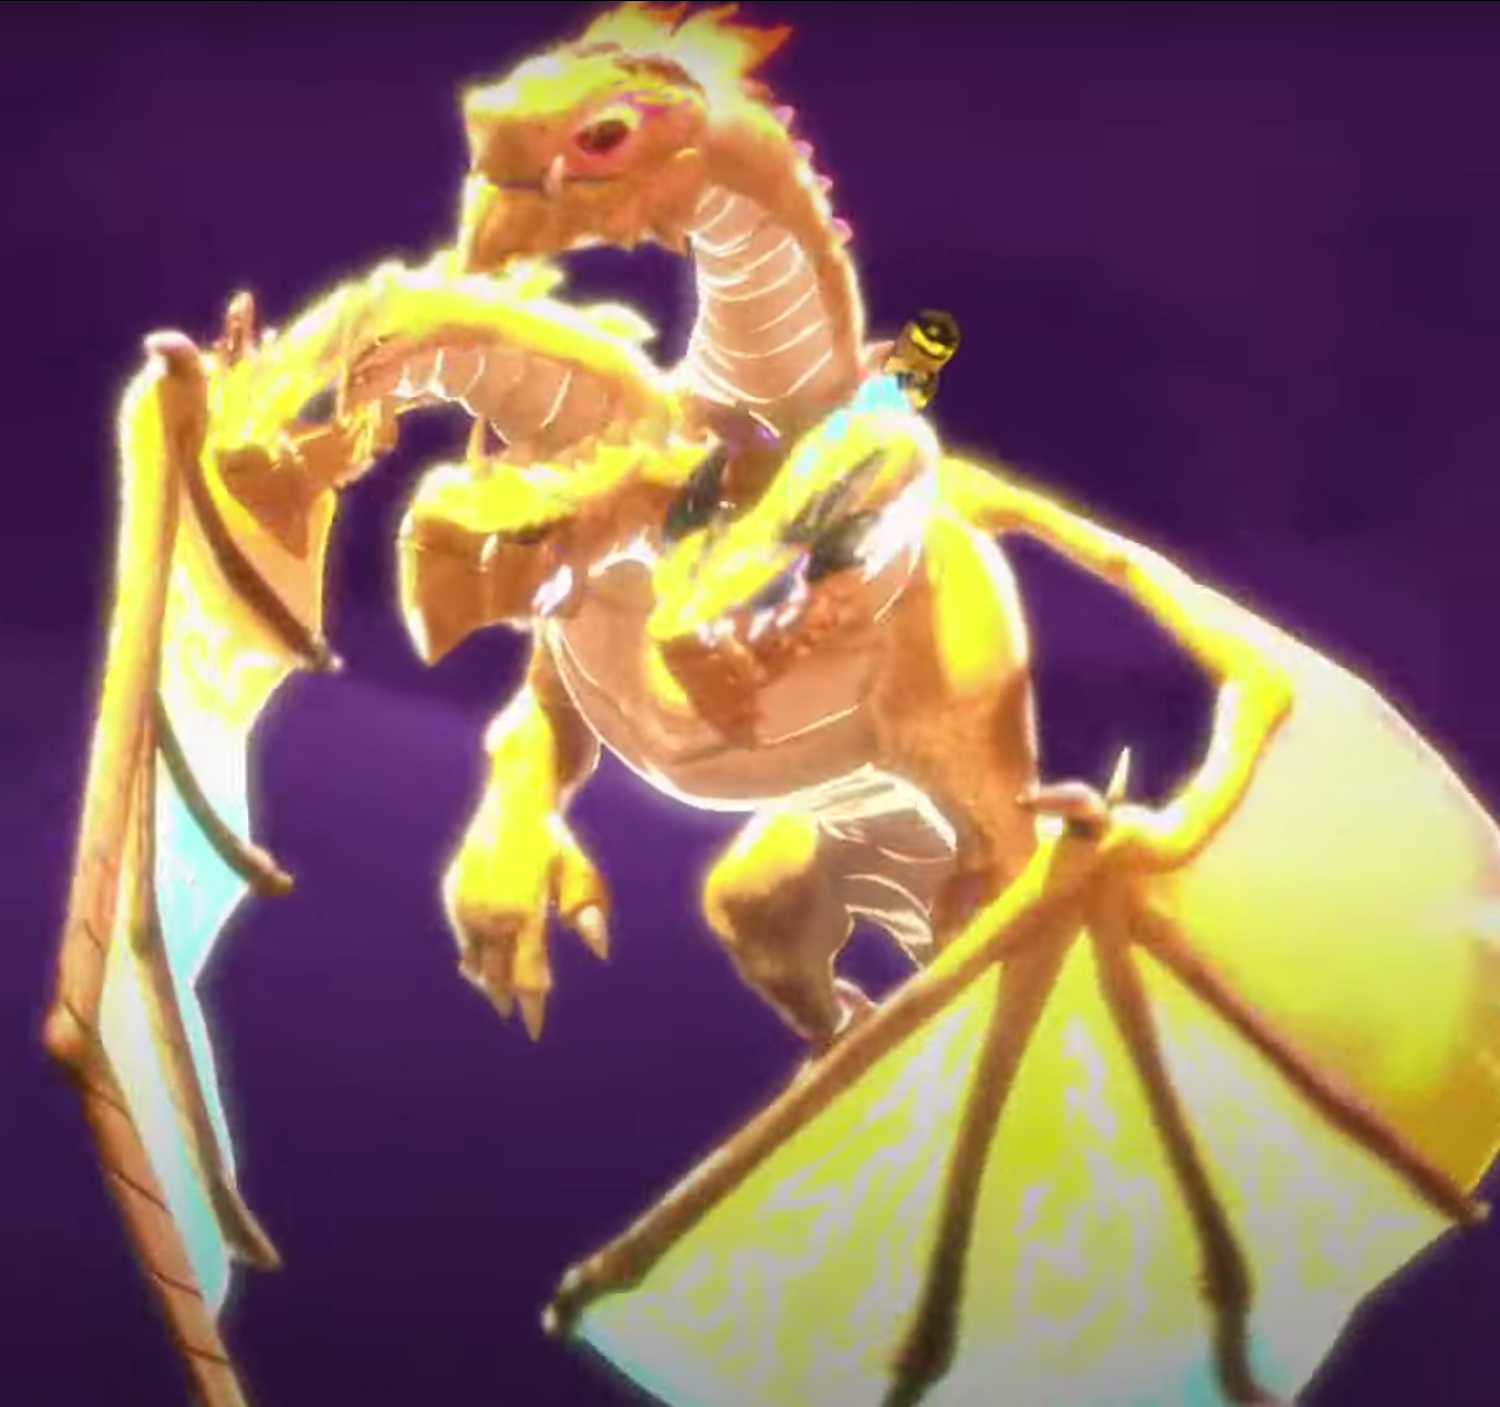 ninjago golden dragon vs overlord